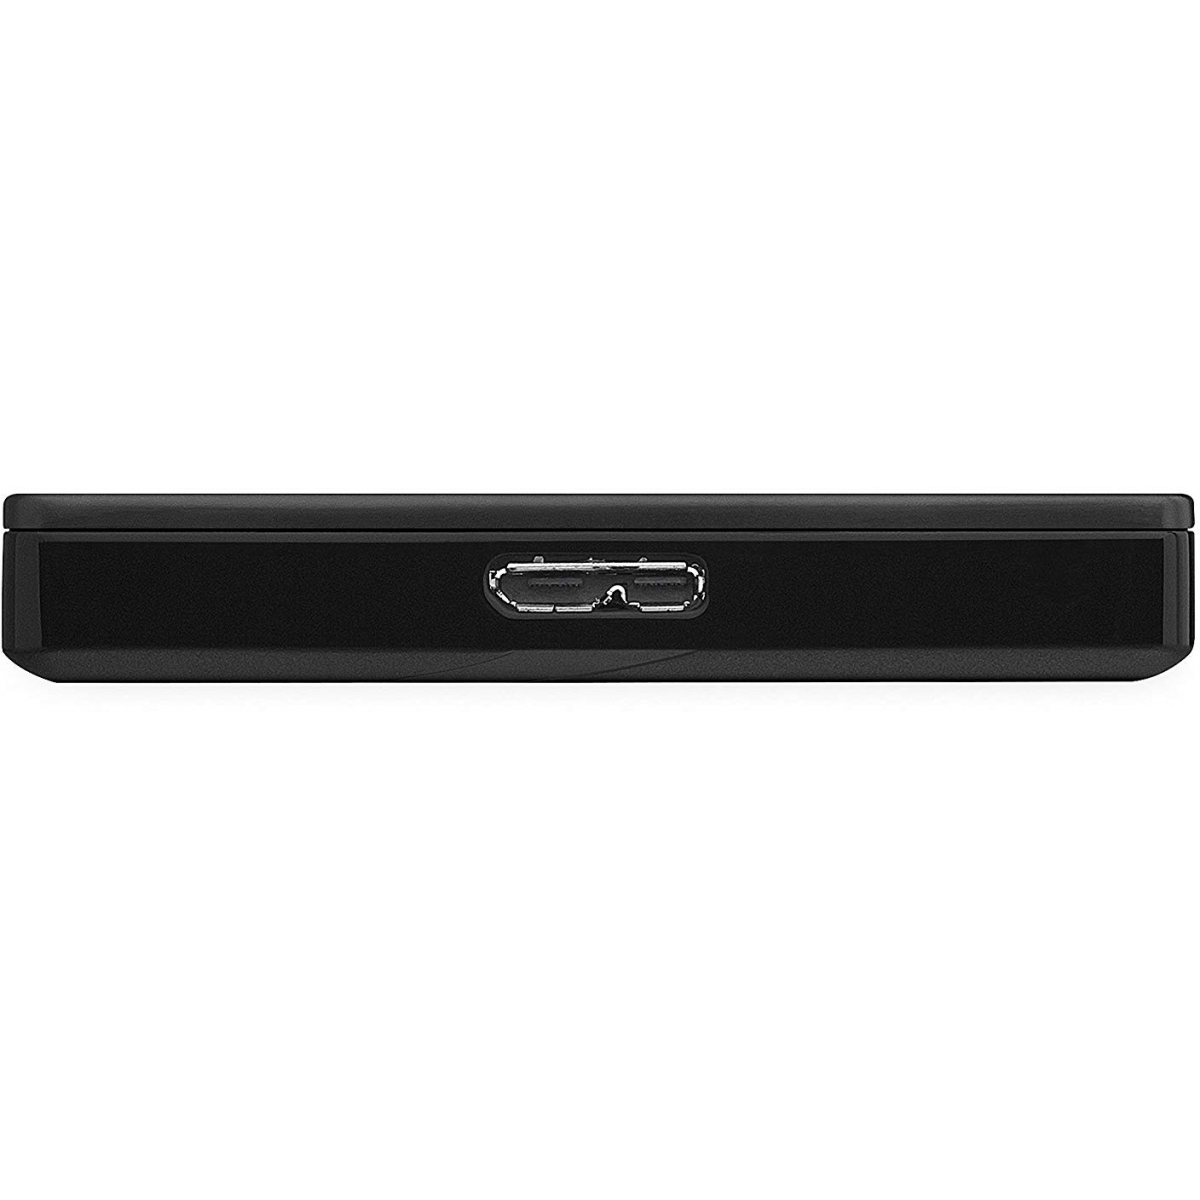 HD Externo Portátil Seagate Backup Plus SLim, 1TB, USB 3.0 Preto, STDR1000100